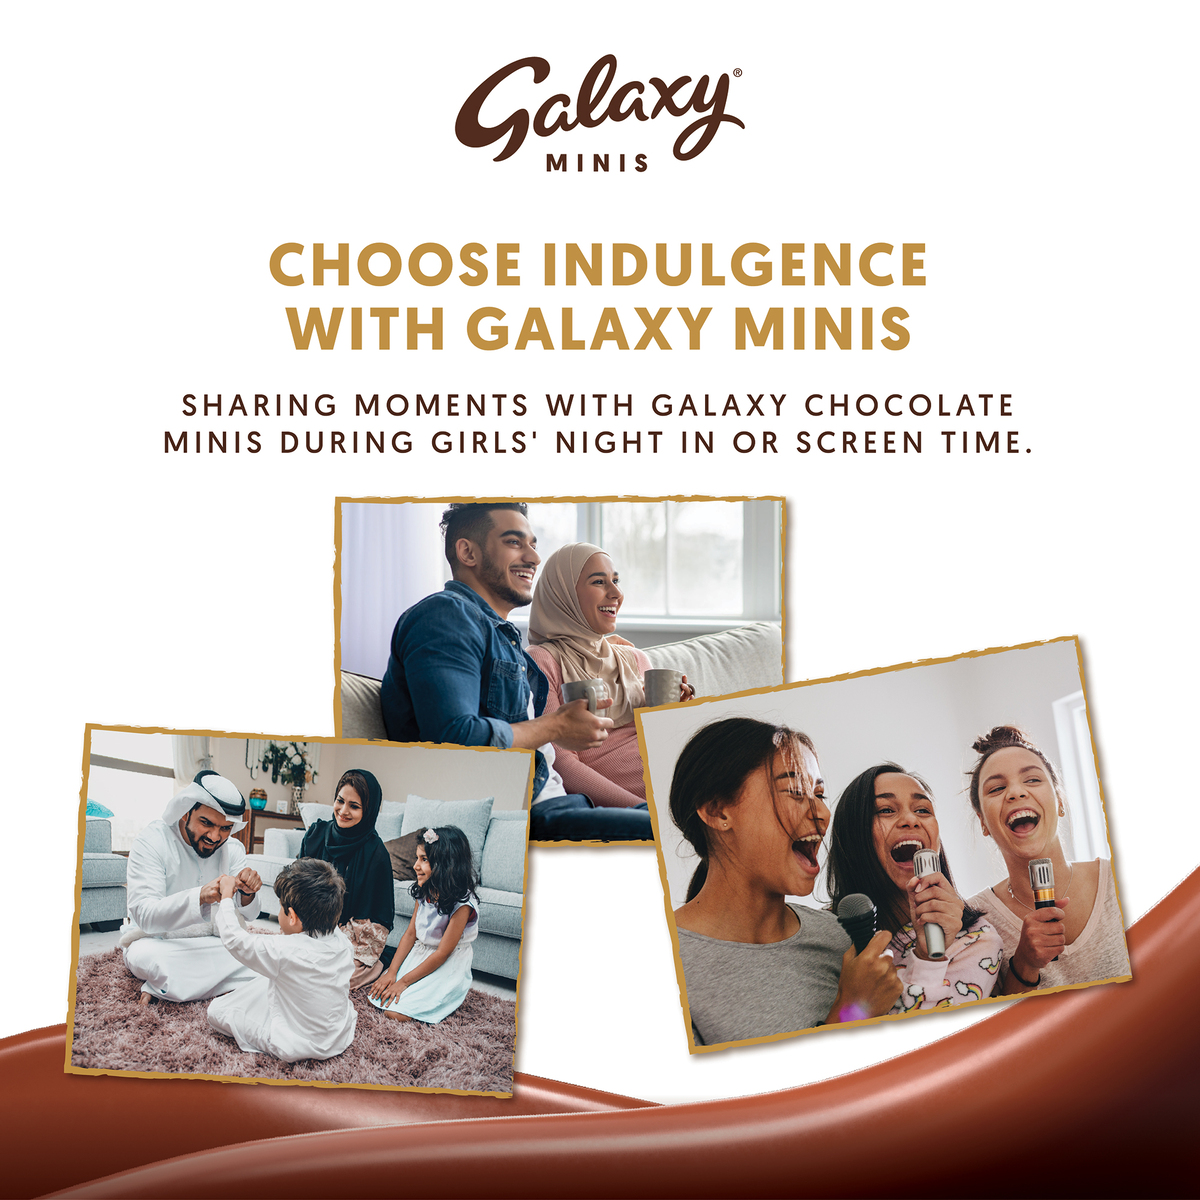 Galaxy Minis Smooth Milk Chocolate Bar 13 pcs 2 x 162.5 g